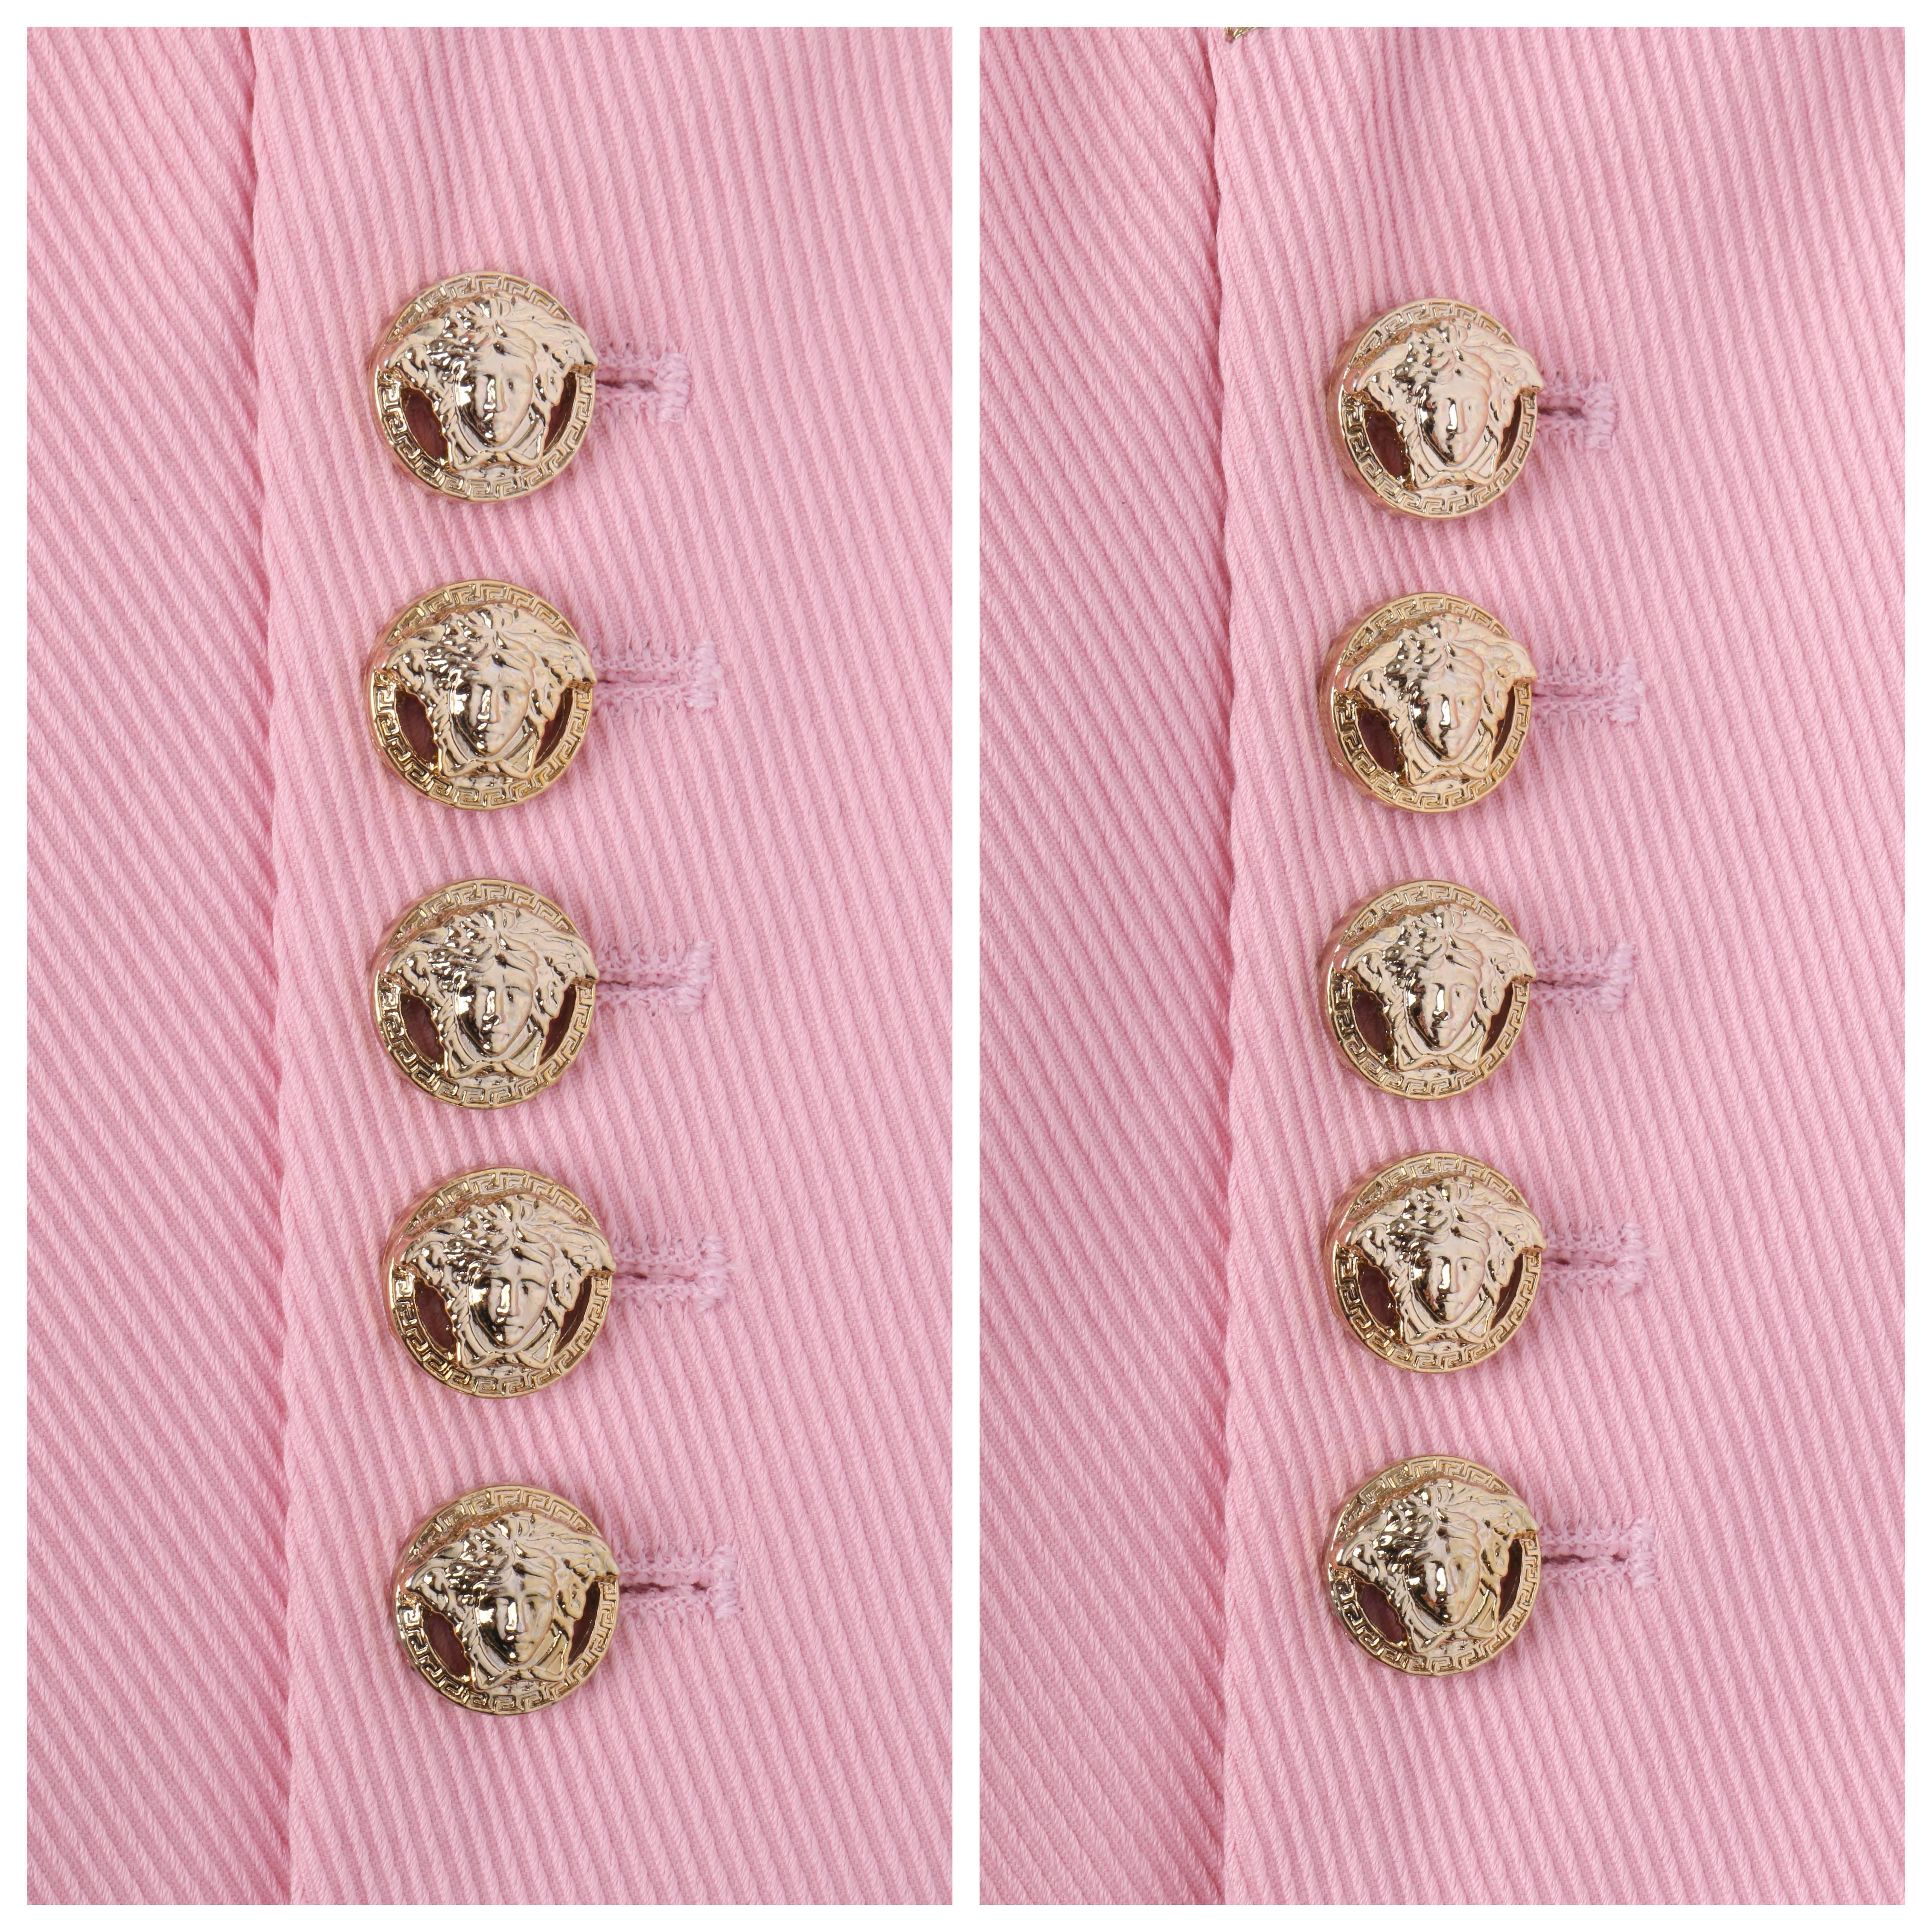 Women's VERSACE S/S 2005 Rose Pink Denim Single Medusa Head Button Blazer Jacket NWT